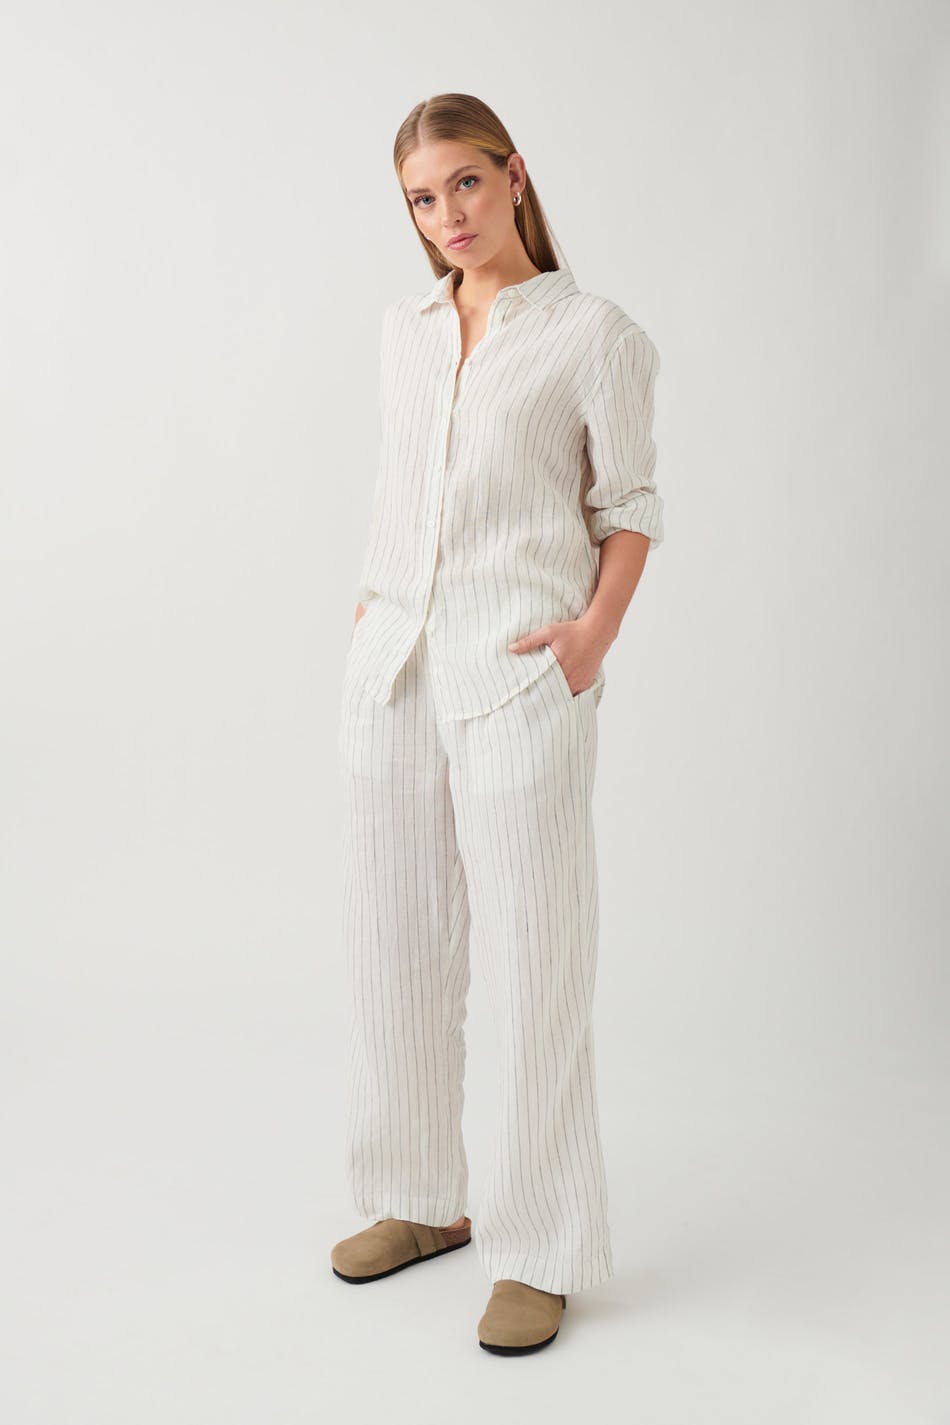 Gina Tricot - Linen trousers - linnebyxor - White - XL - Female